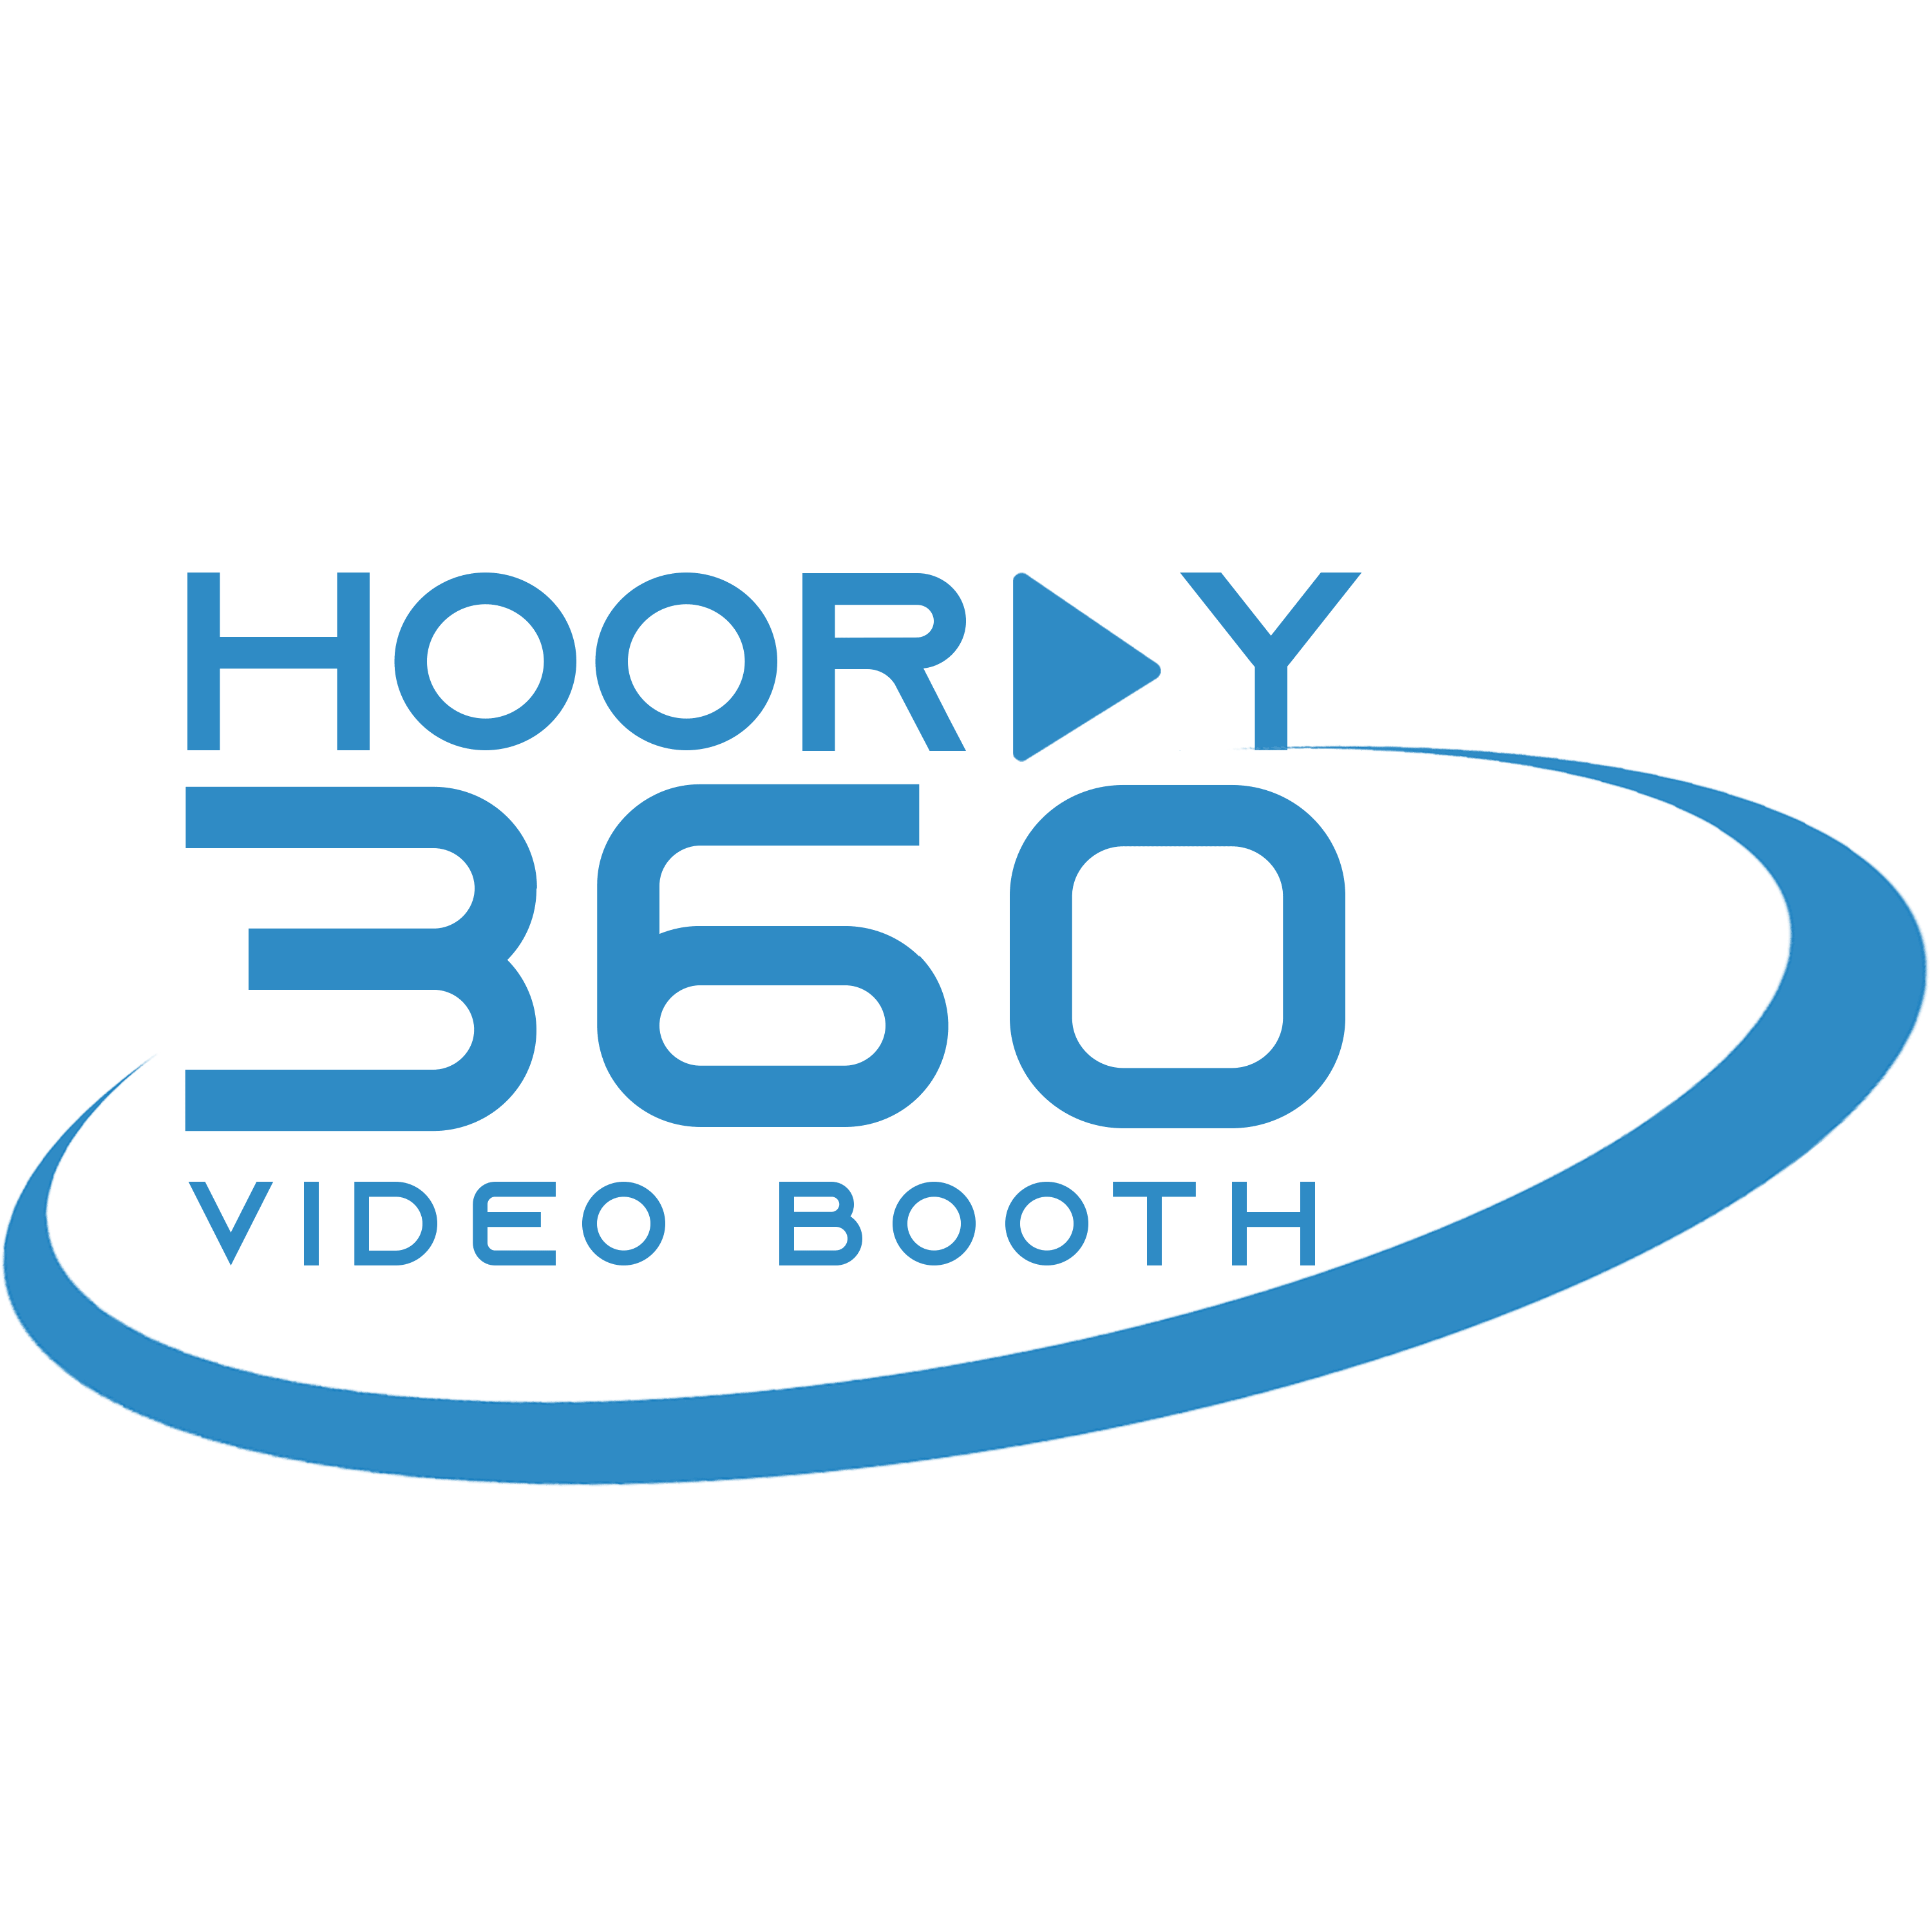 Horray 360 Video logo